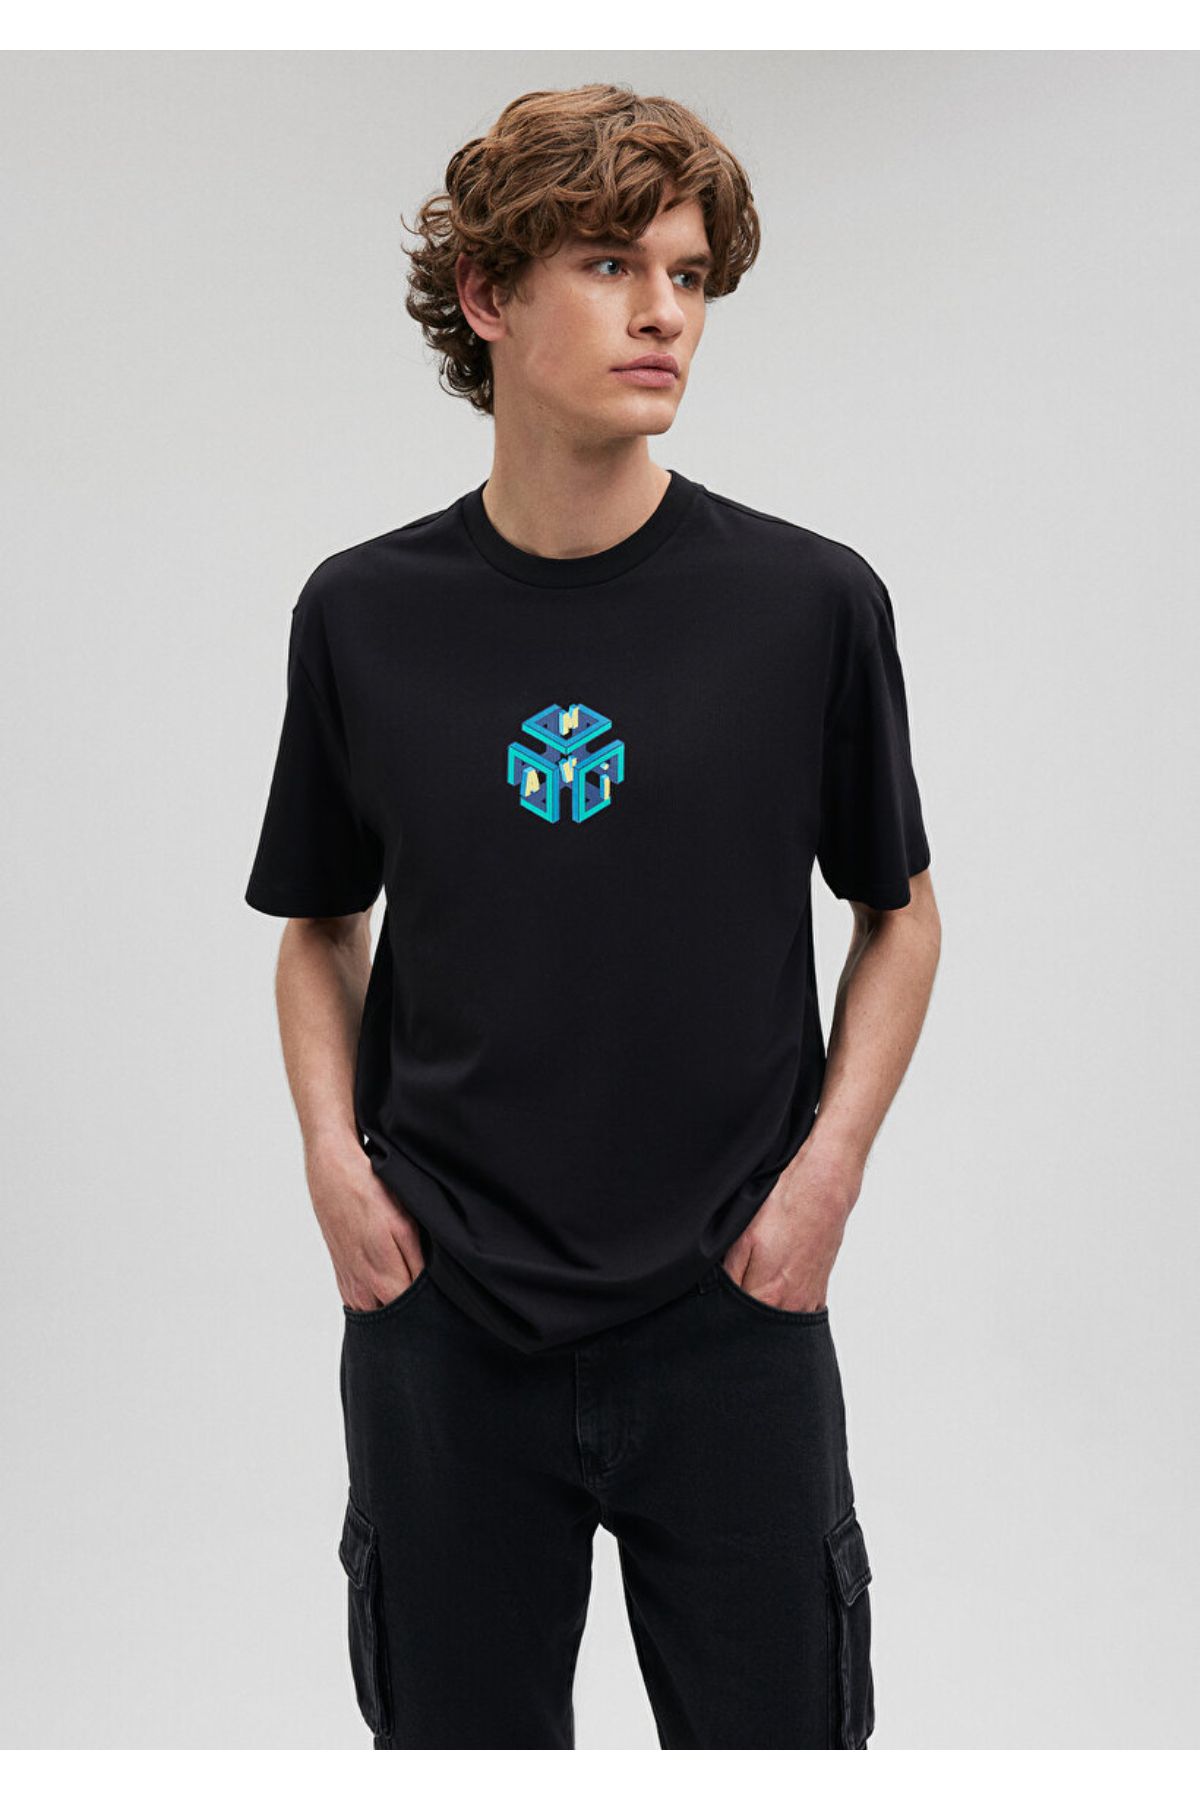 Mavi پیراهن سیاه مردانه چاپ شده M0612108-900